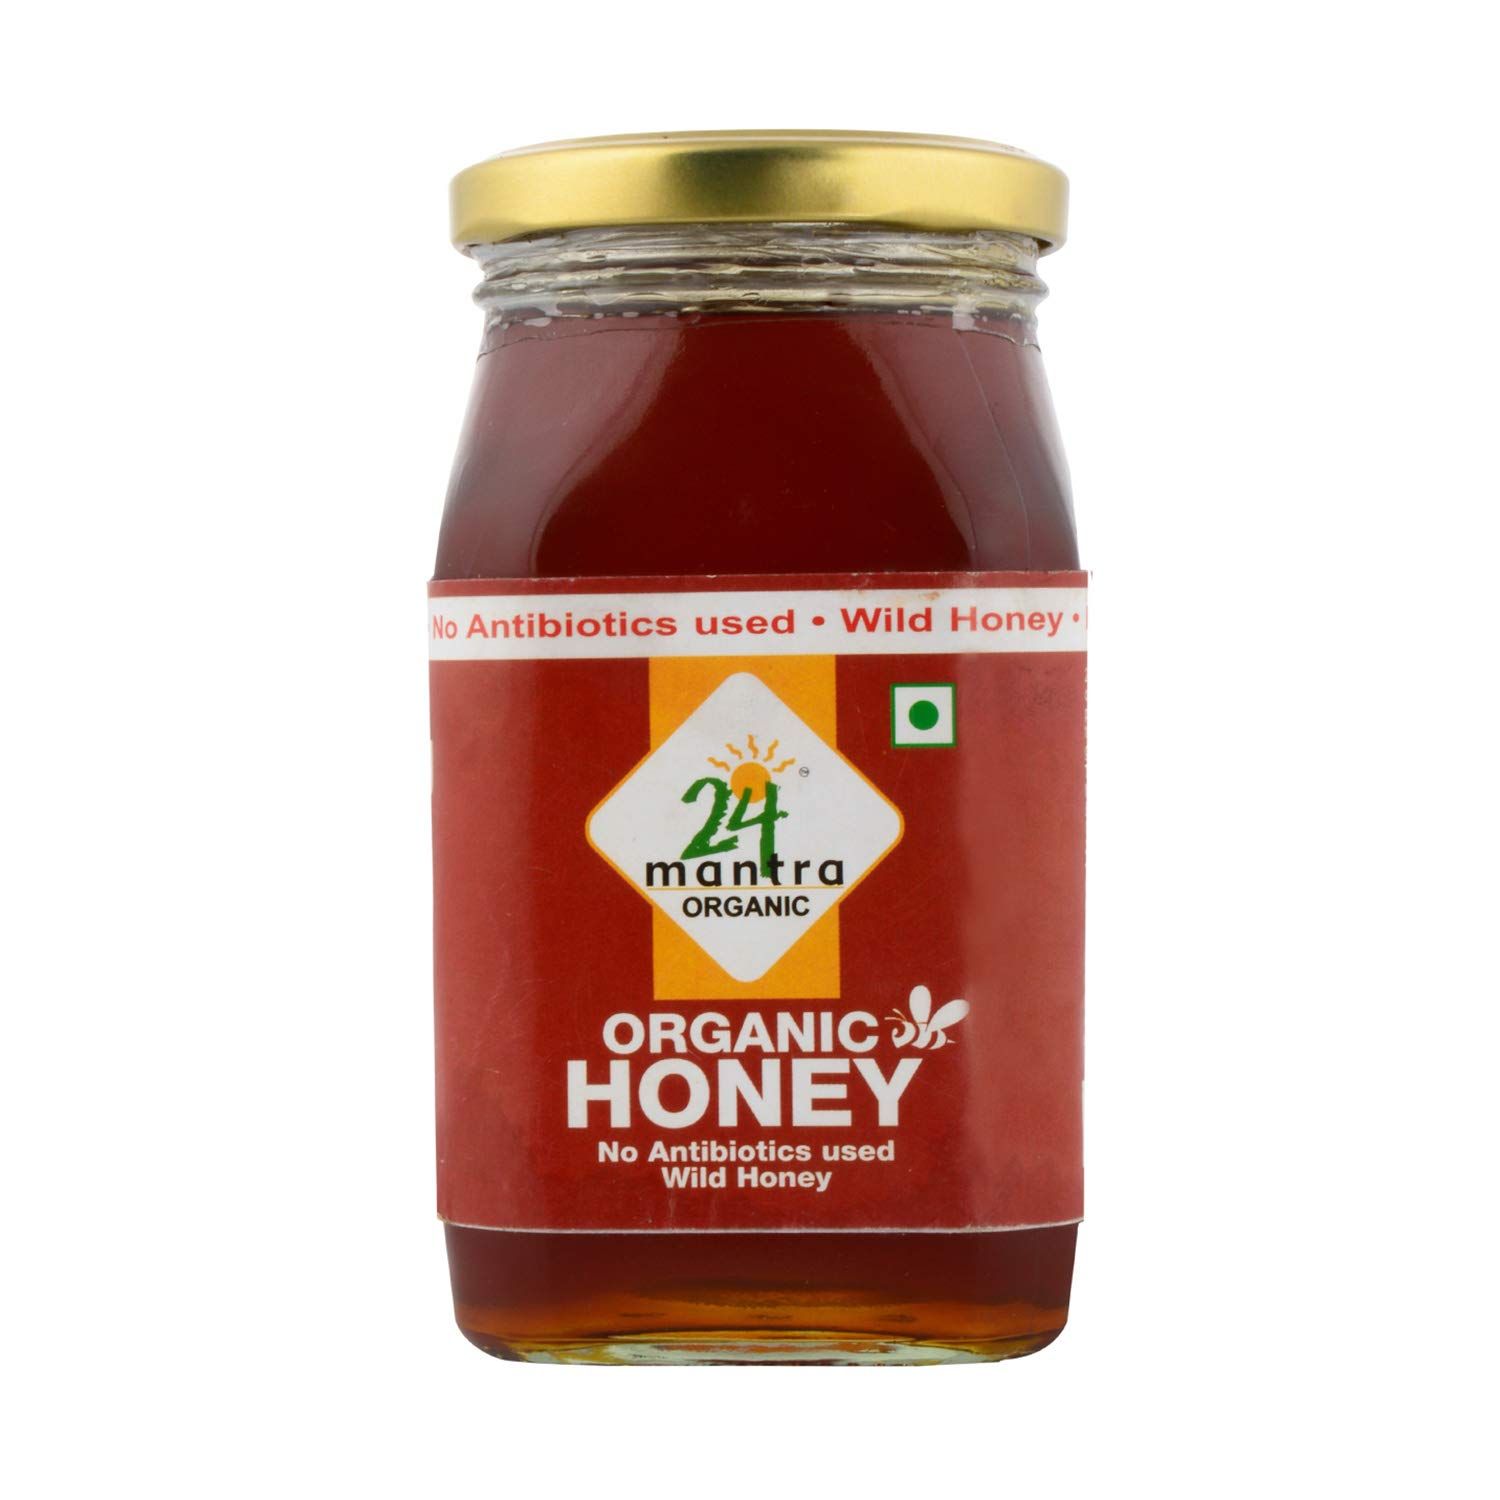 24 Mantra Organic Wild Honey Image